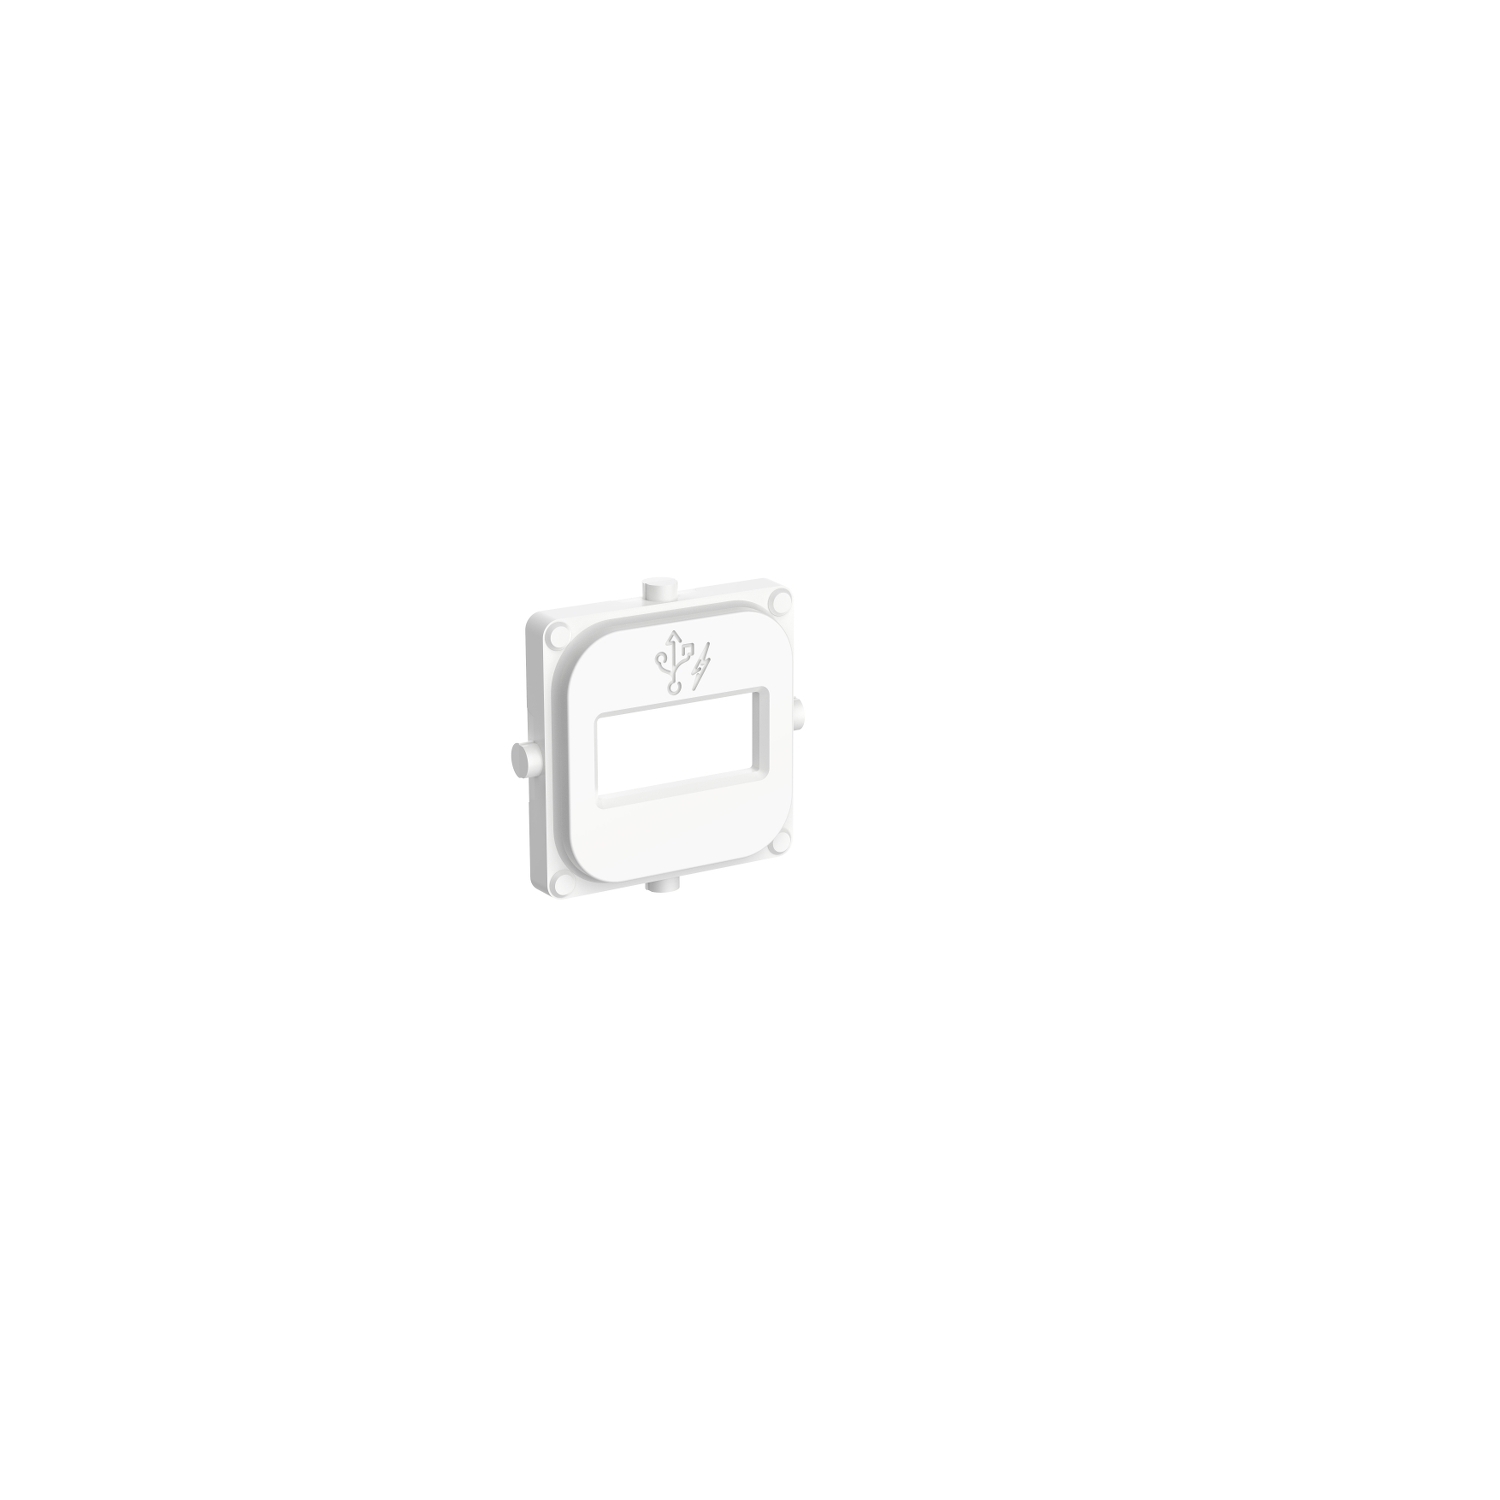 PDL Iconic - Cap Single USB Charger Type A - Vivid White